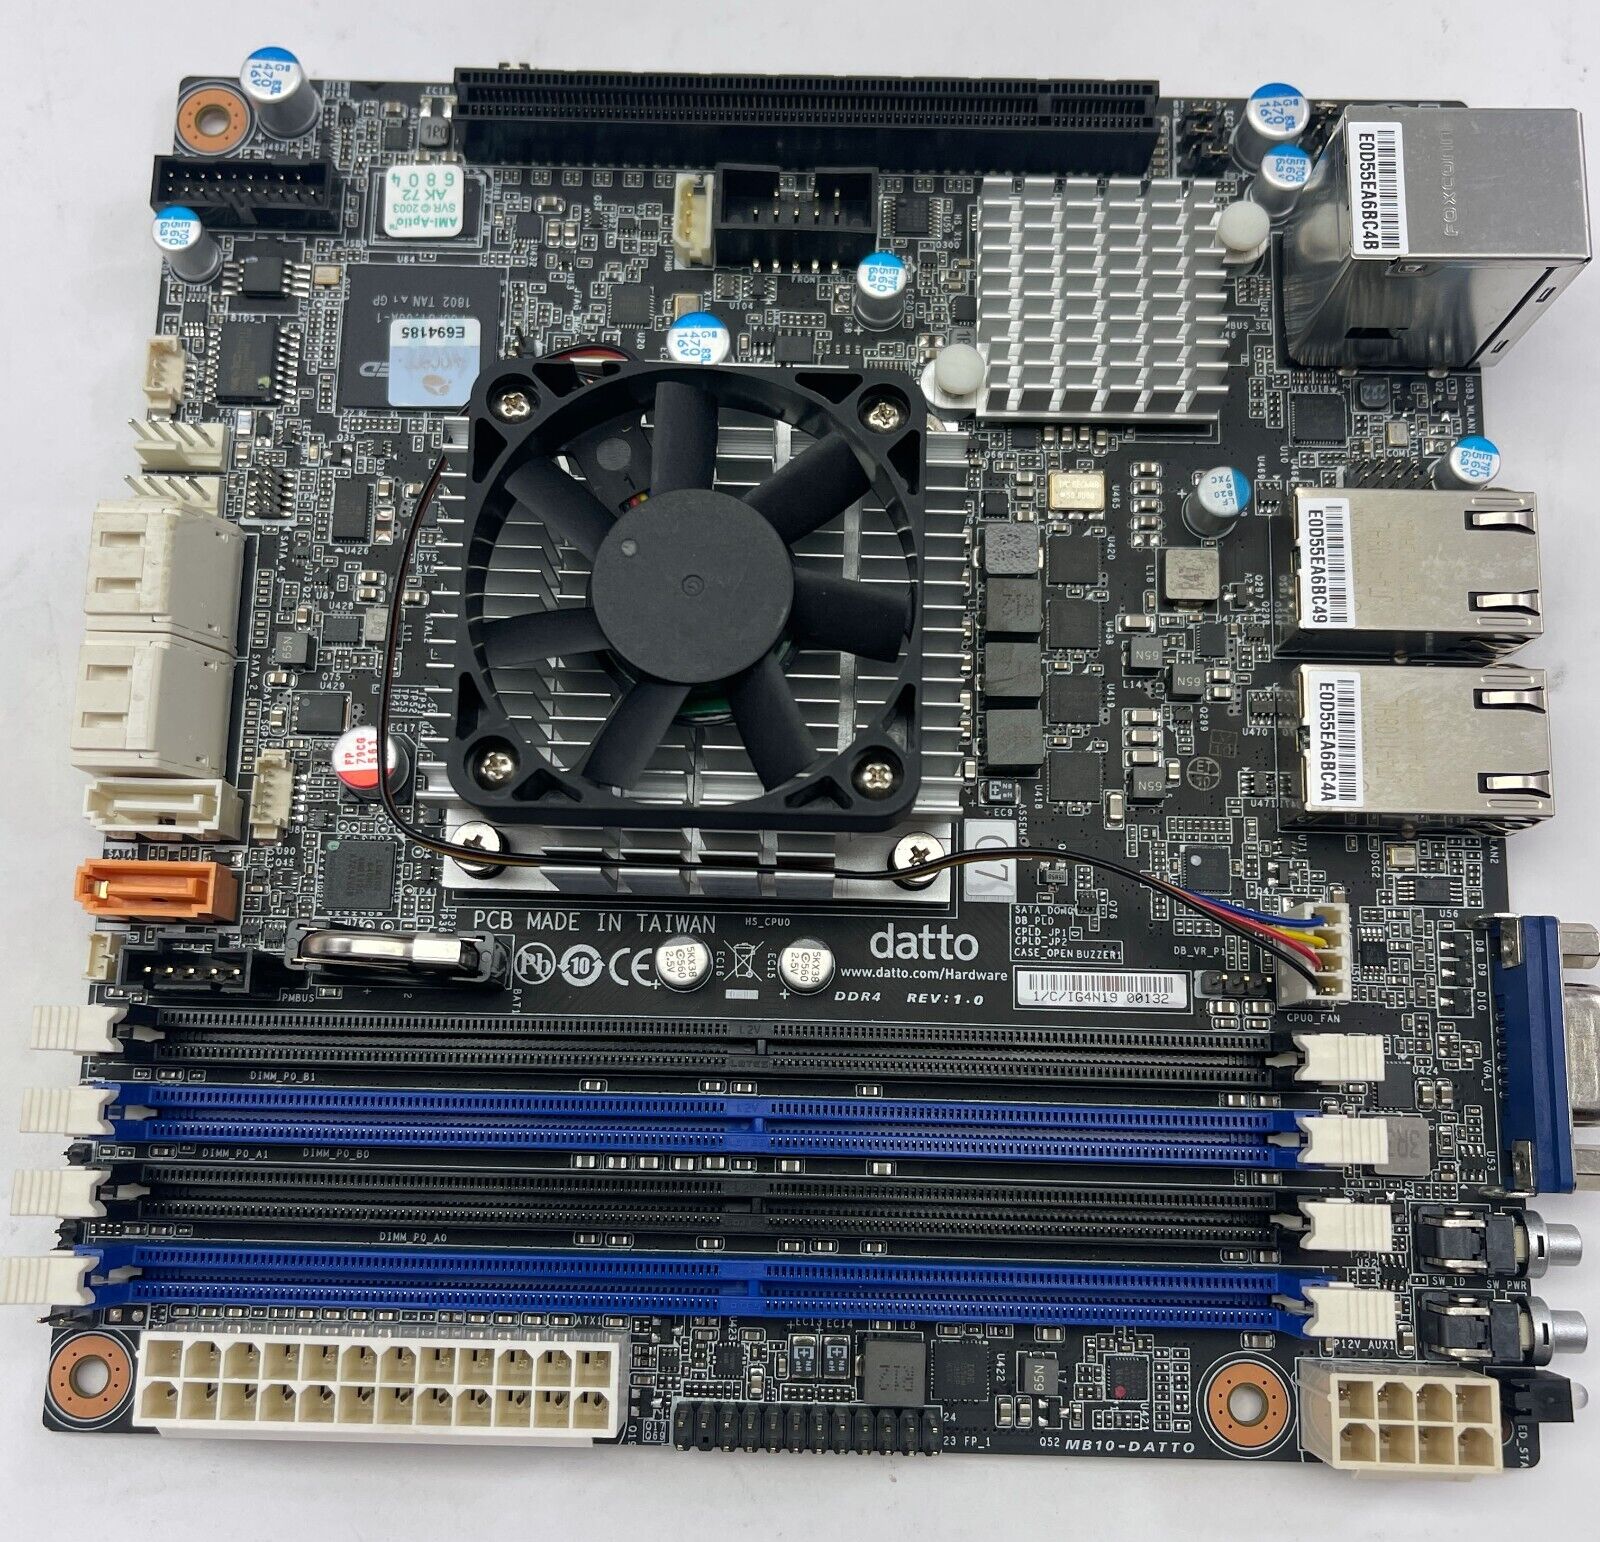 GIGABYTE MB10-Datto Motherboard Xeon D-1521- SR2DF 2.40 GHz